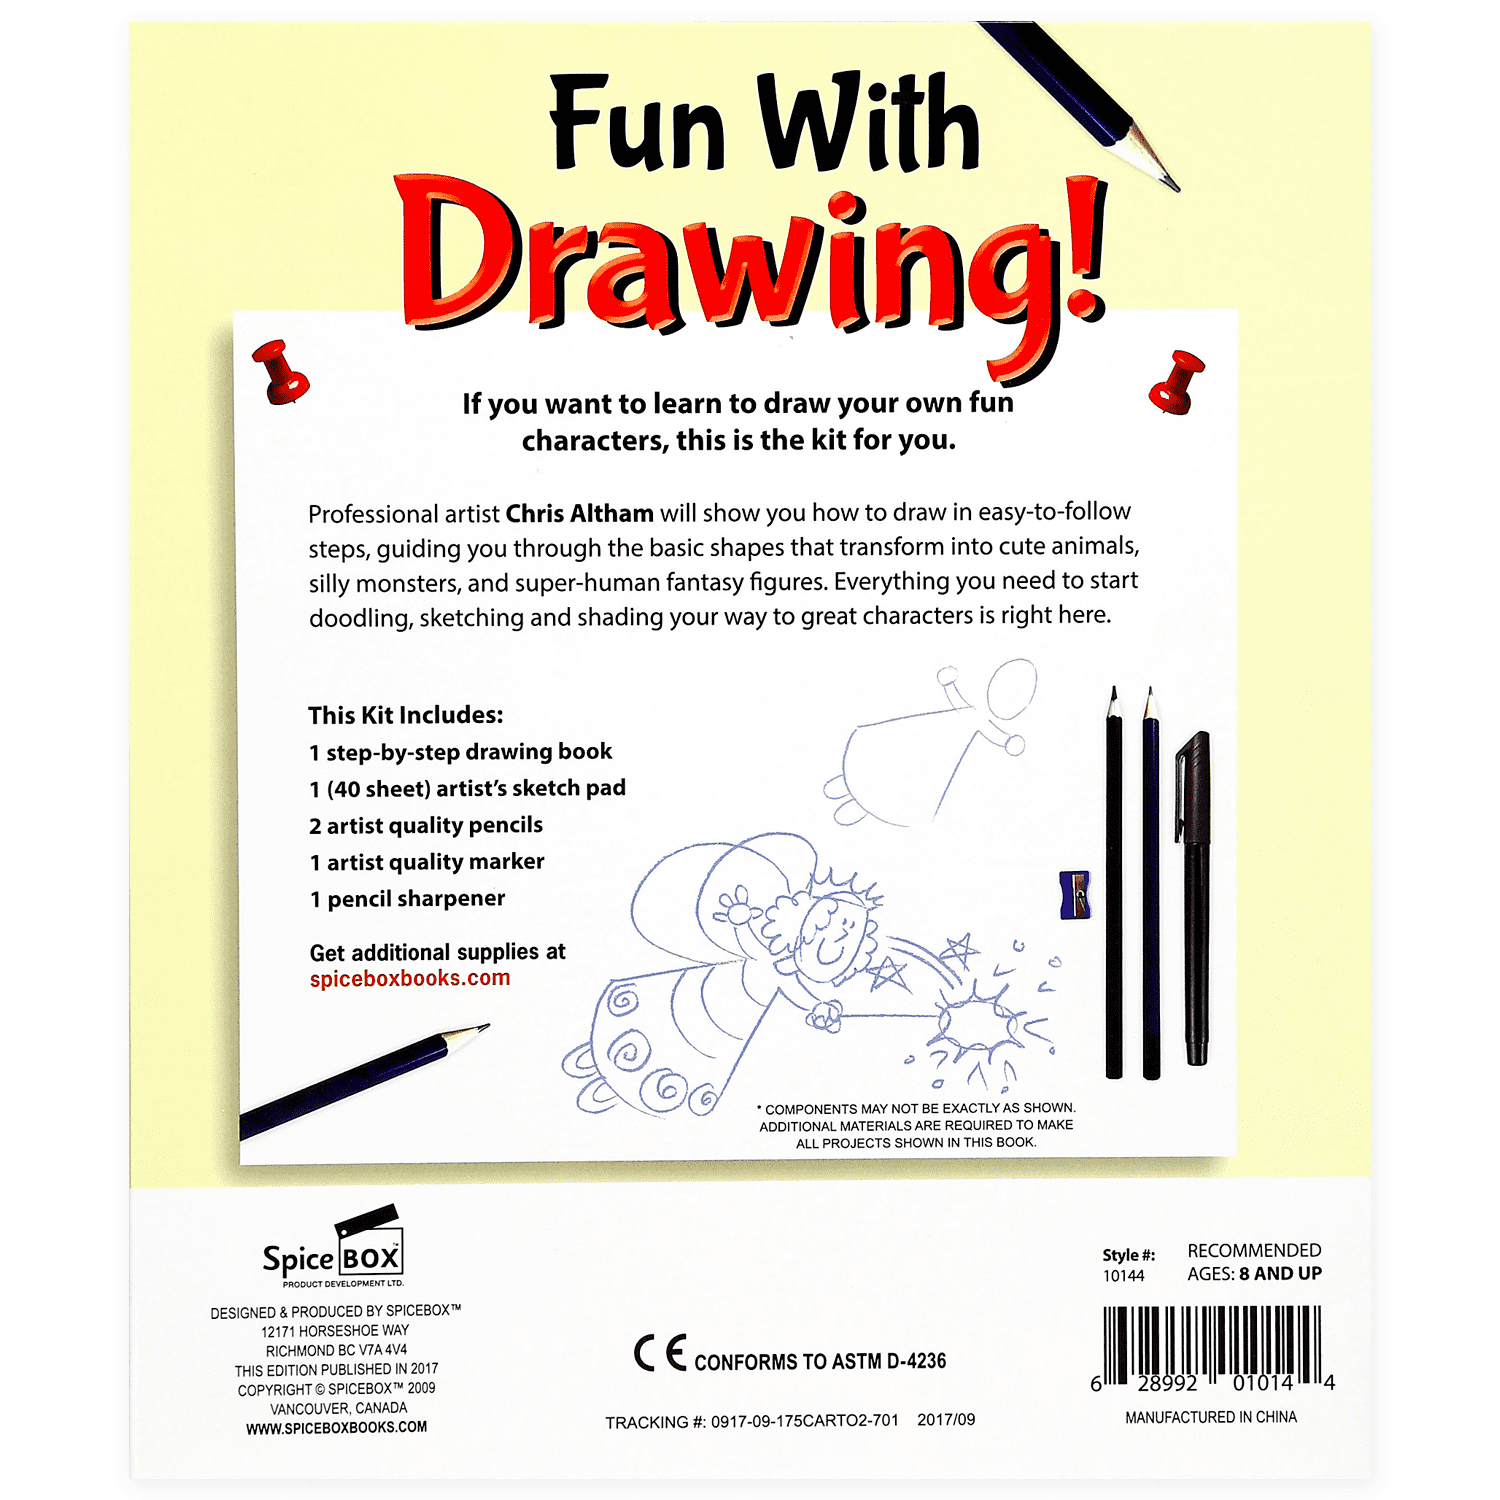 SpiceBox Fun with Drawing Kit